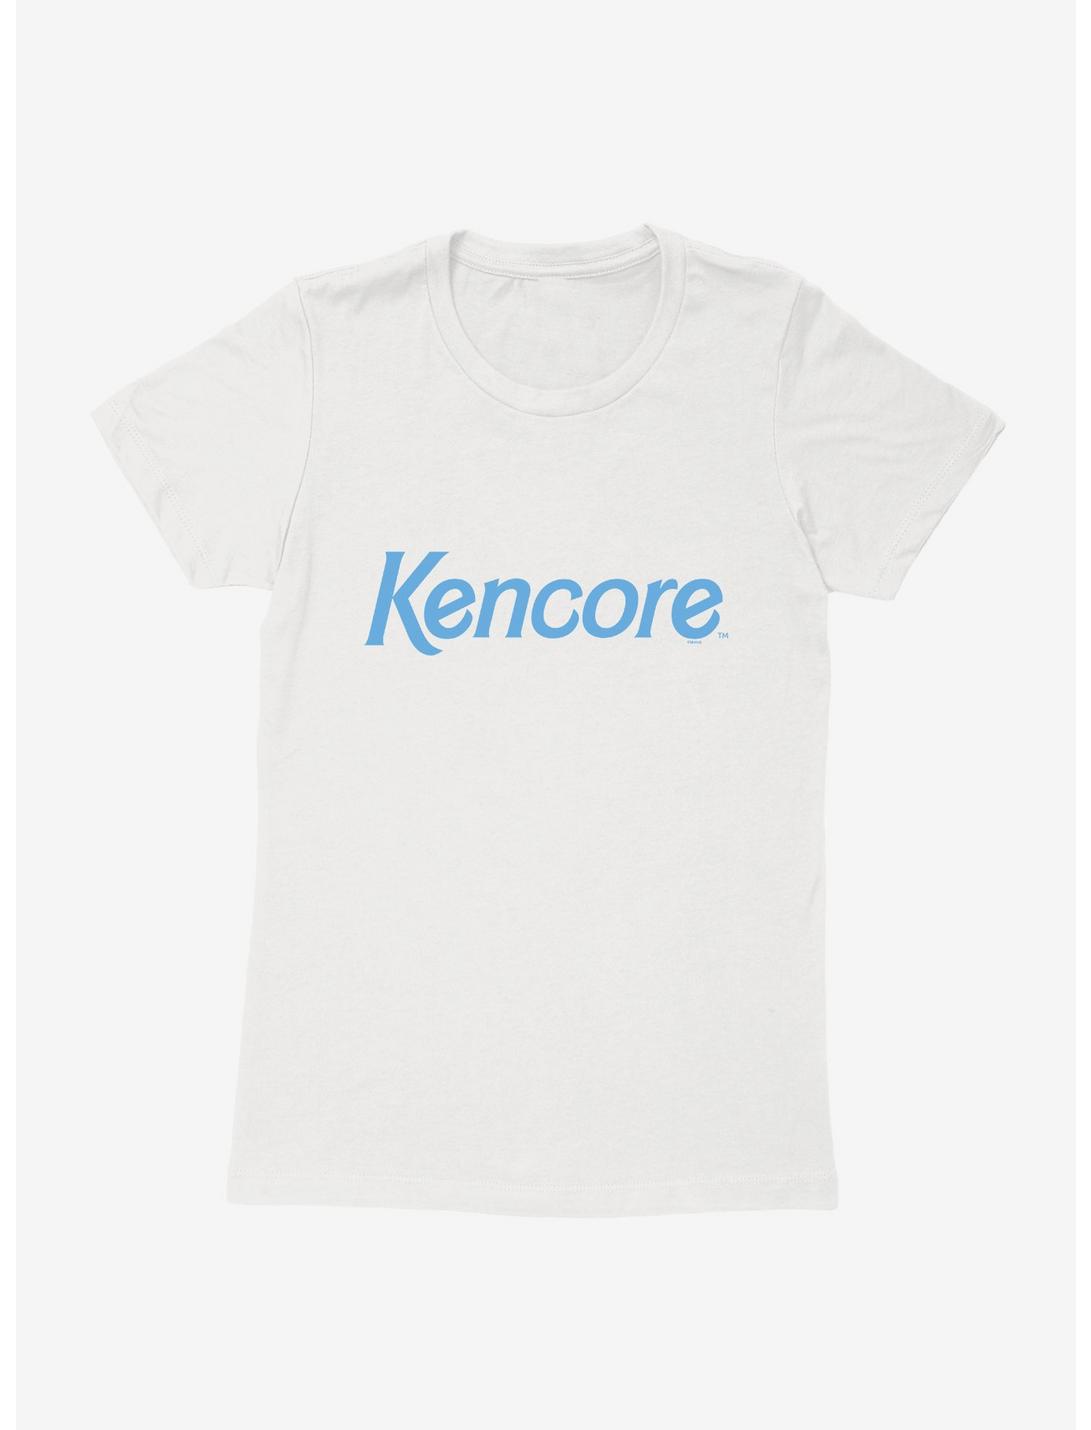 Barbie Kencore Womens T-Shirt, WHITE, hi-res